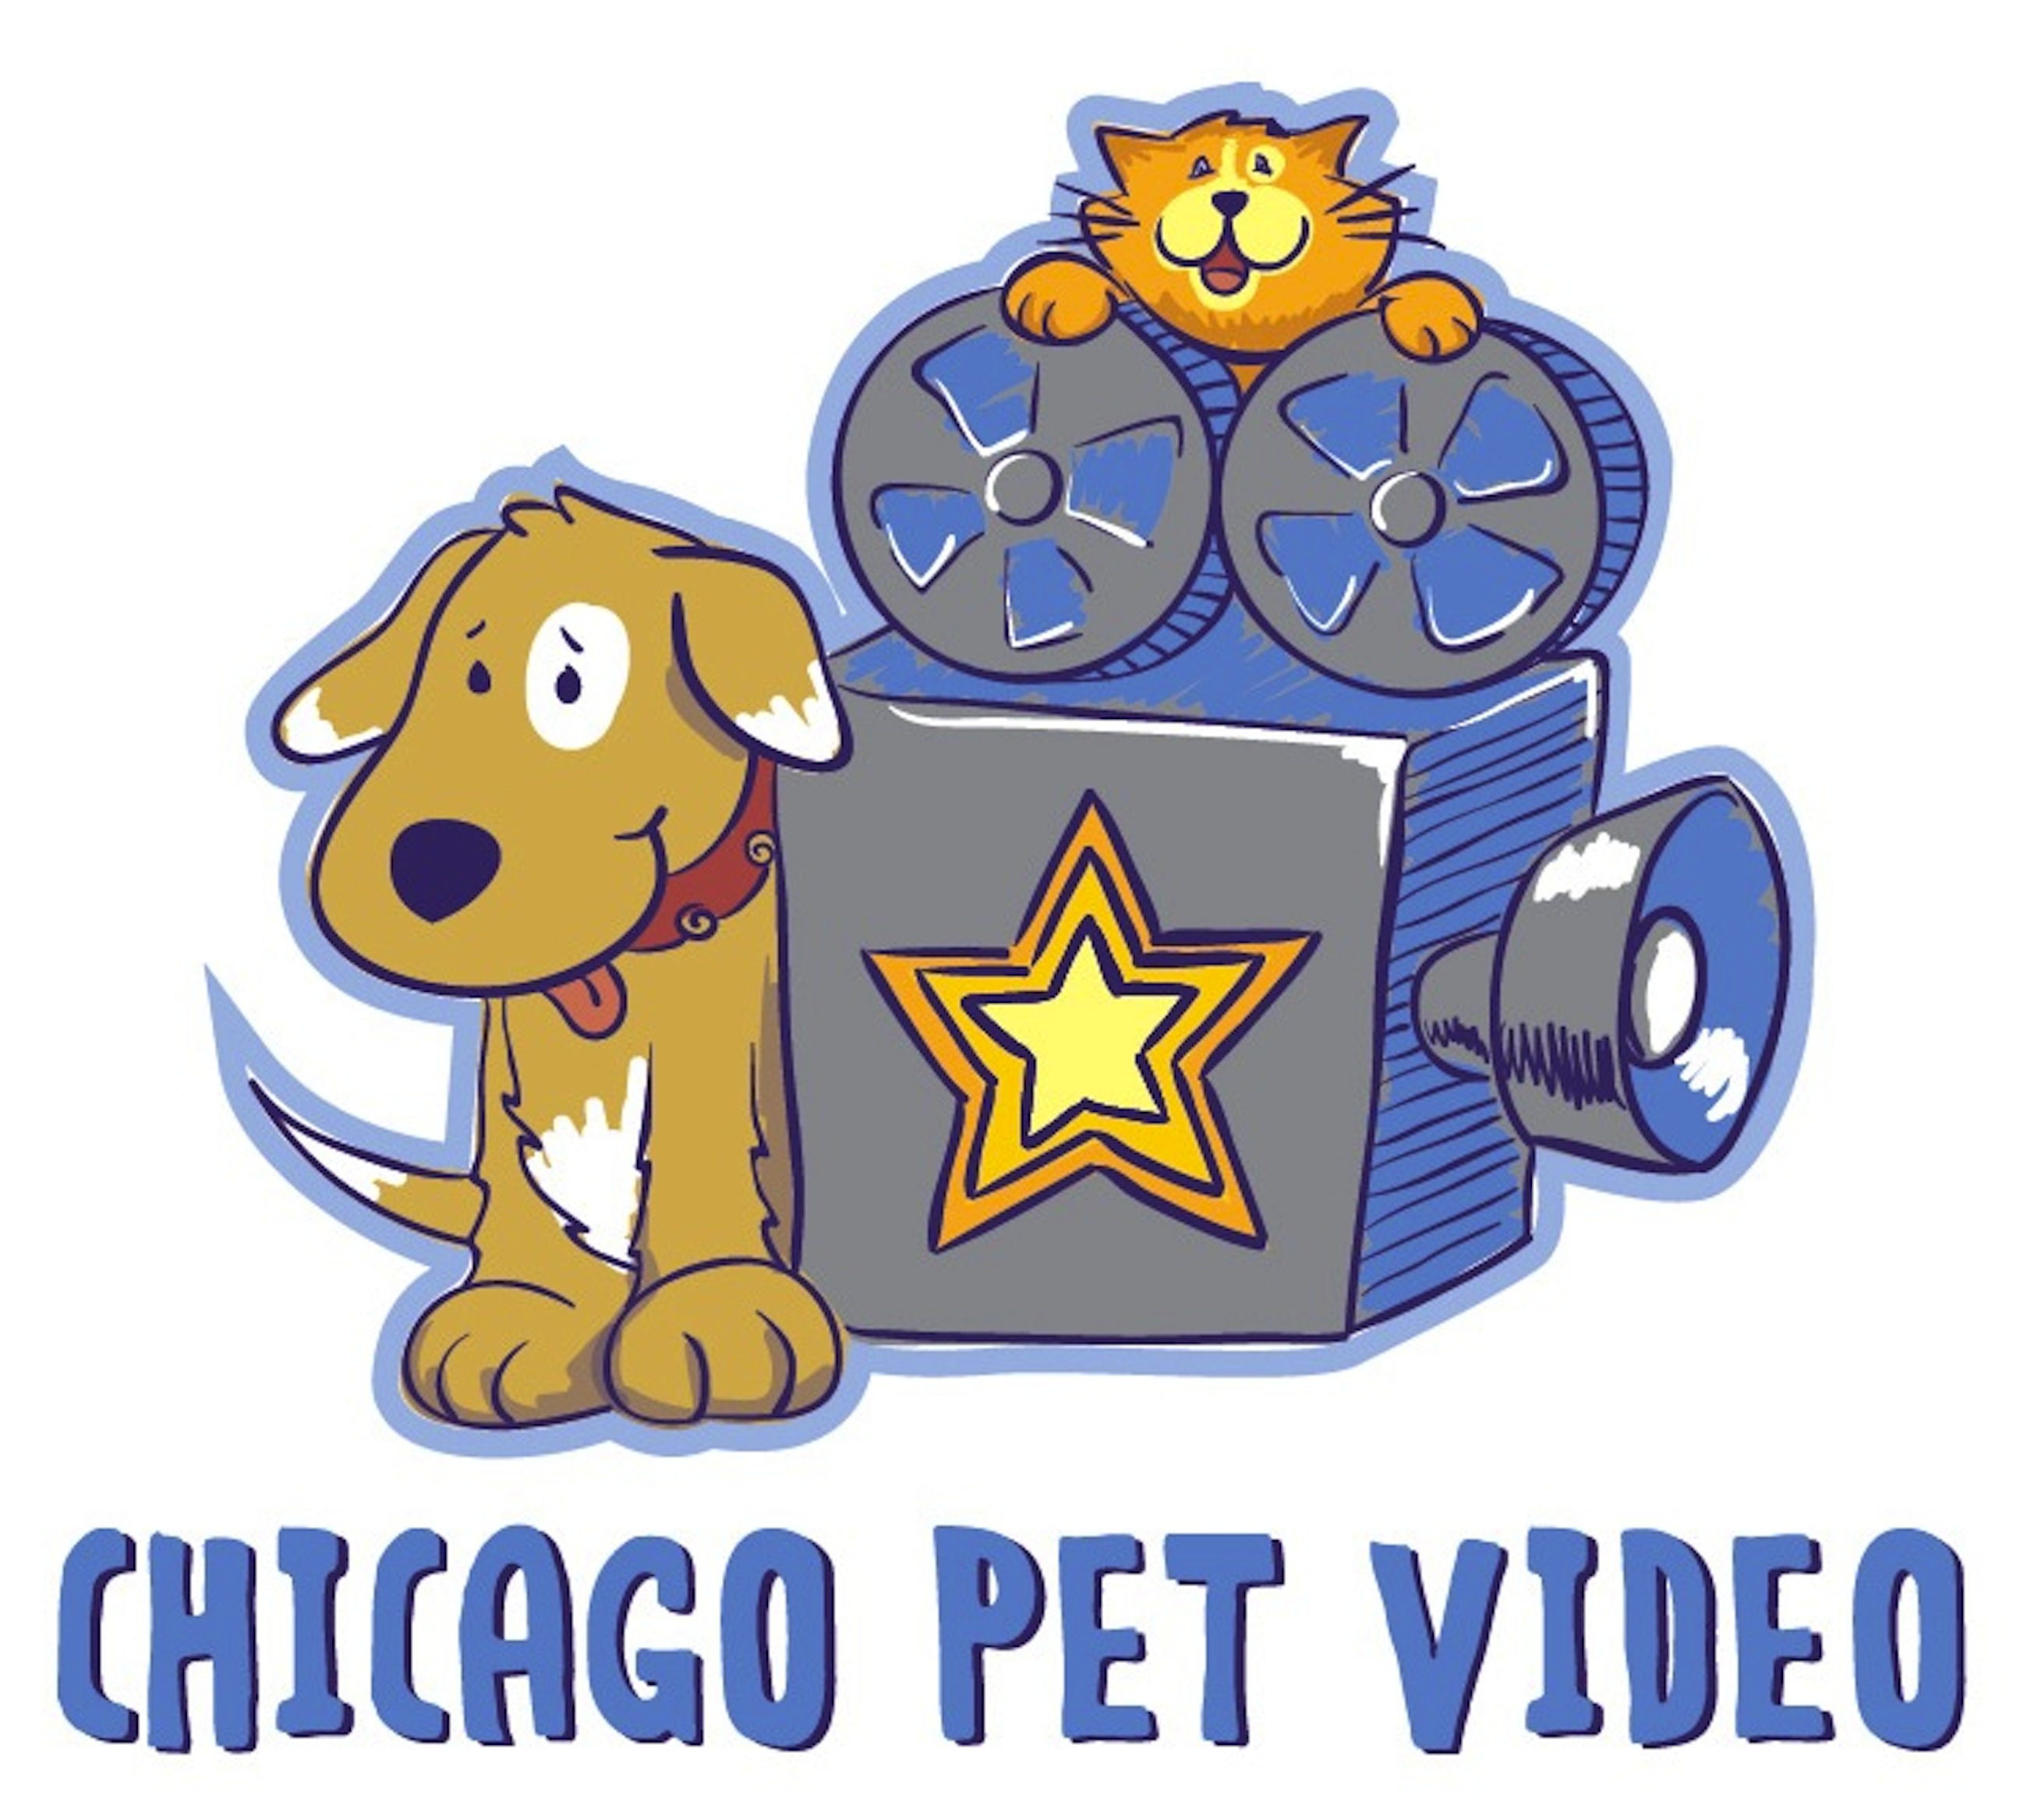 ChicagoPetVideo_logo3